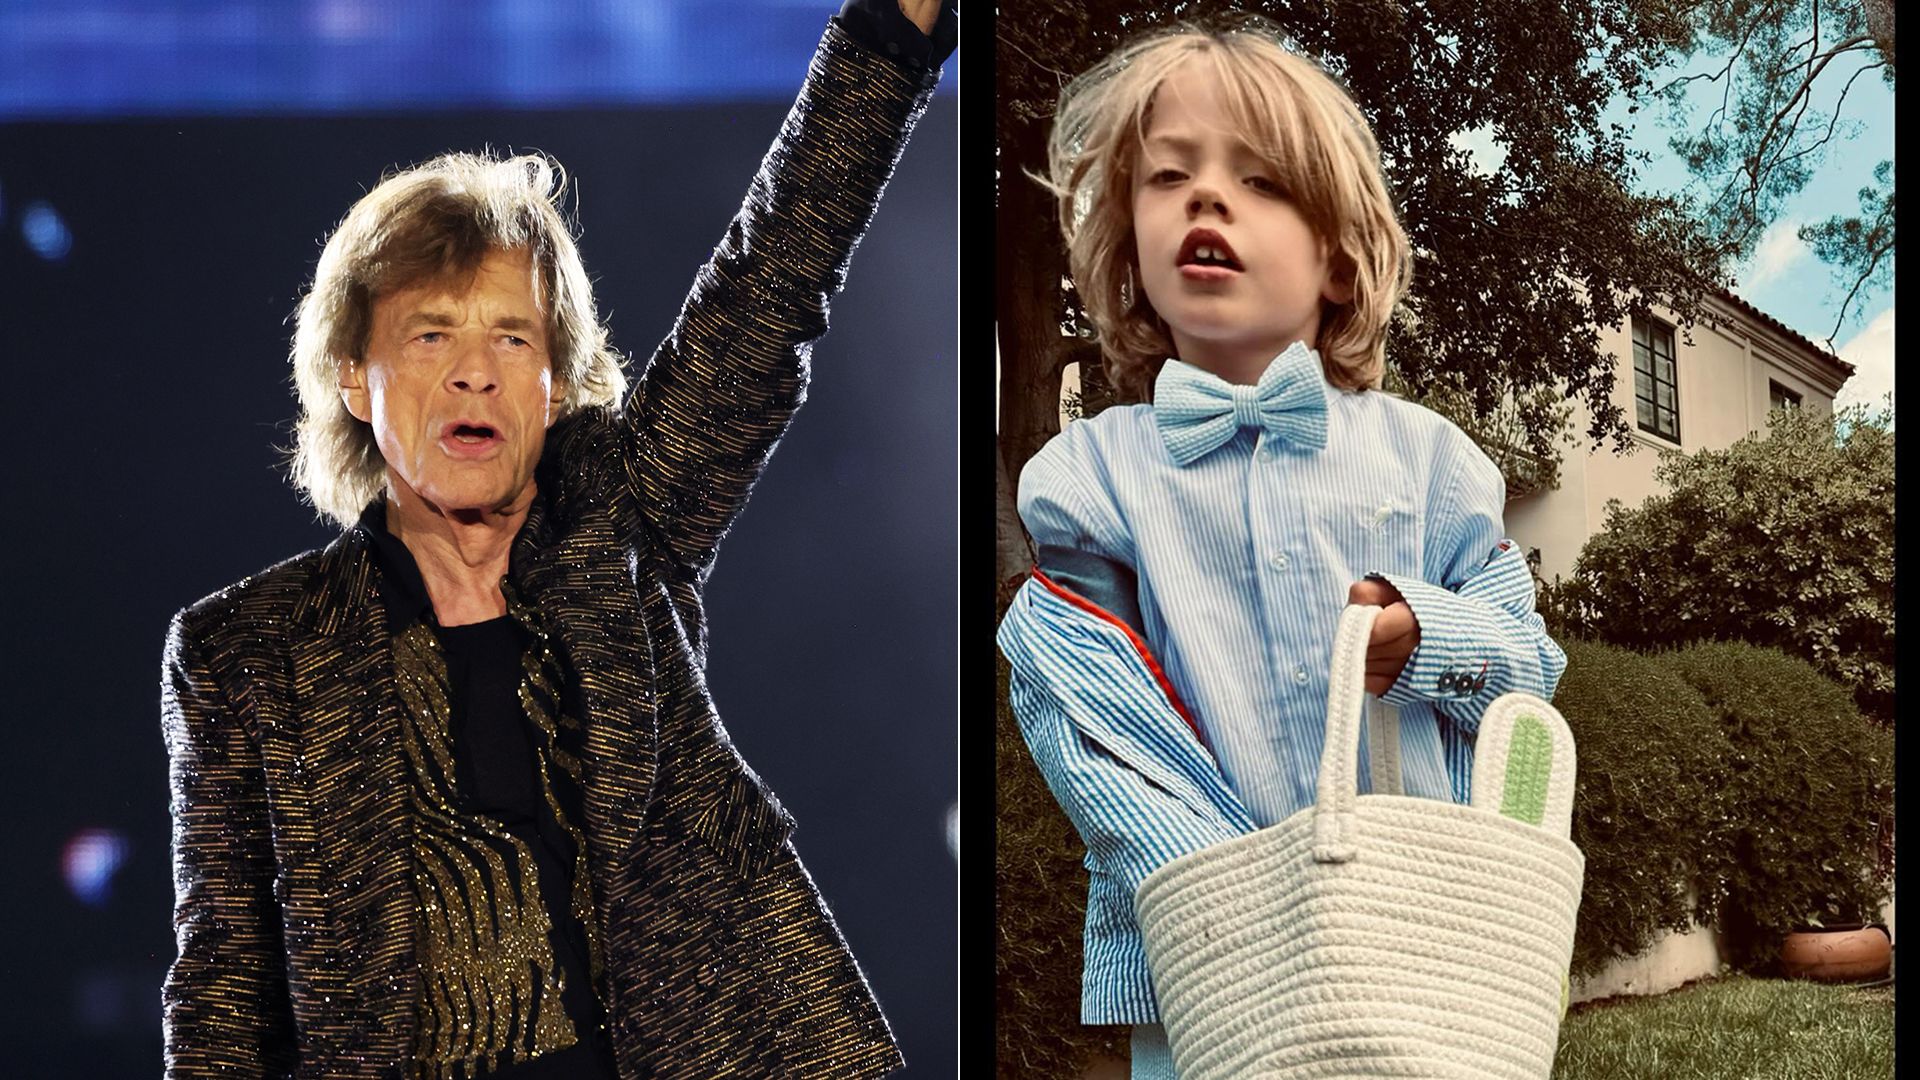 Mick Jagger split image son deveraux